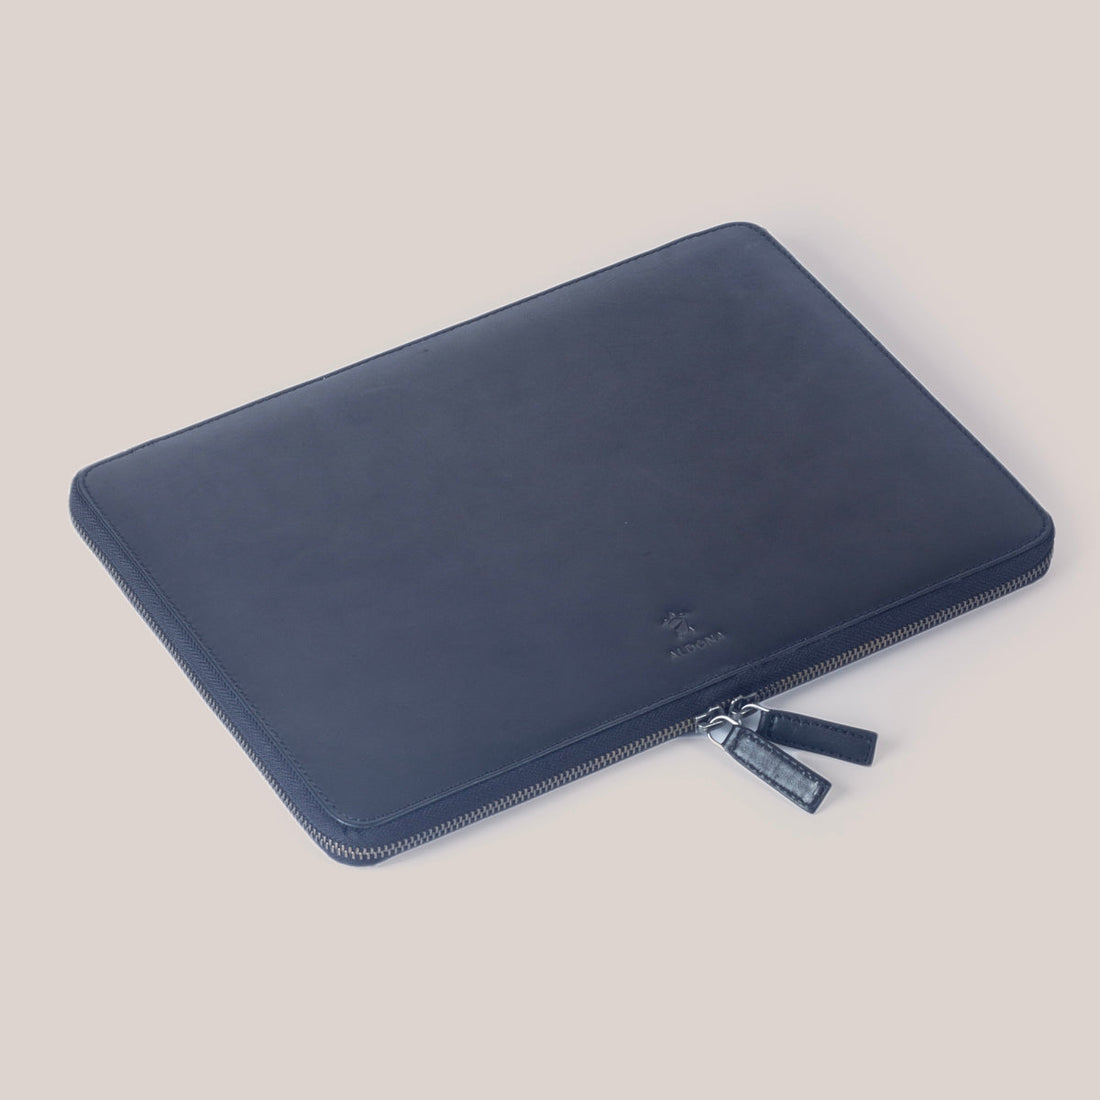 DELL XPS Zippered Laptop Case - Felt and Tan Crunch